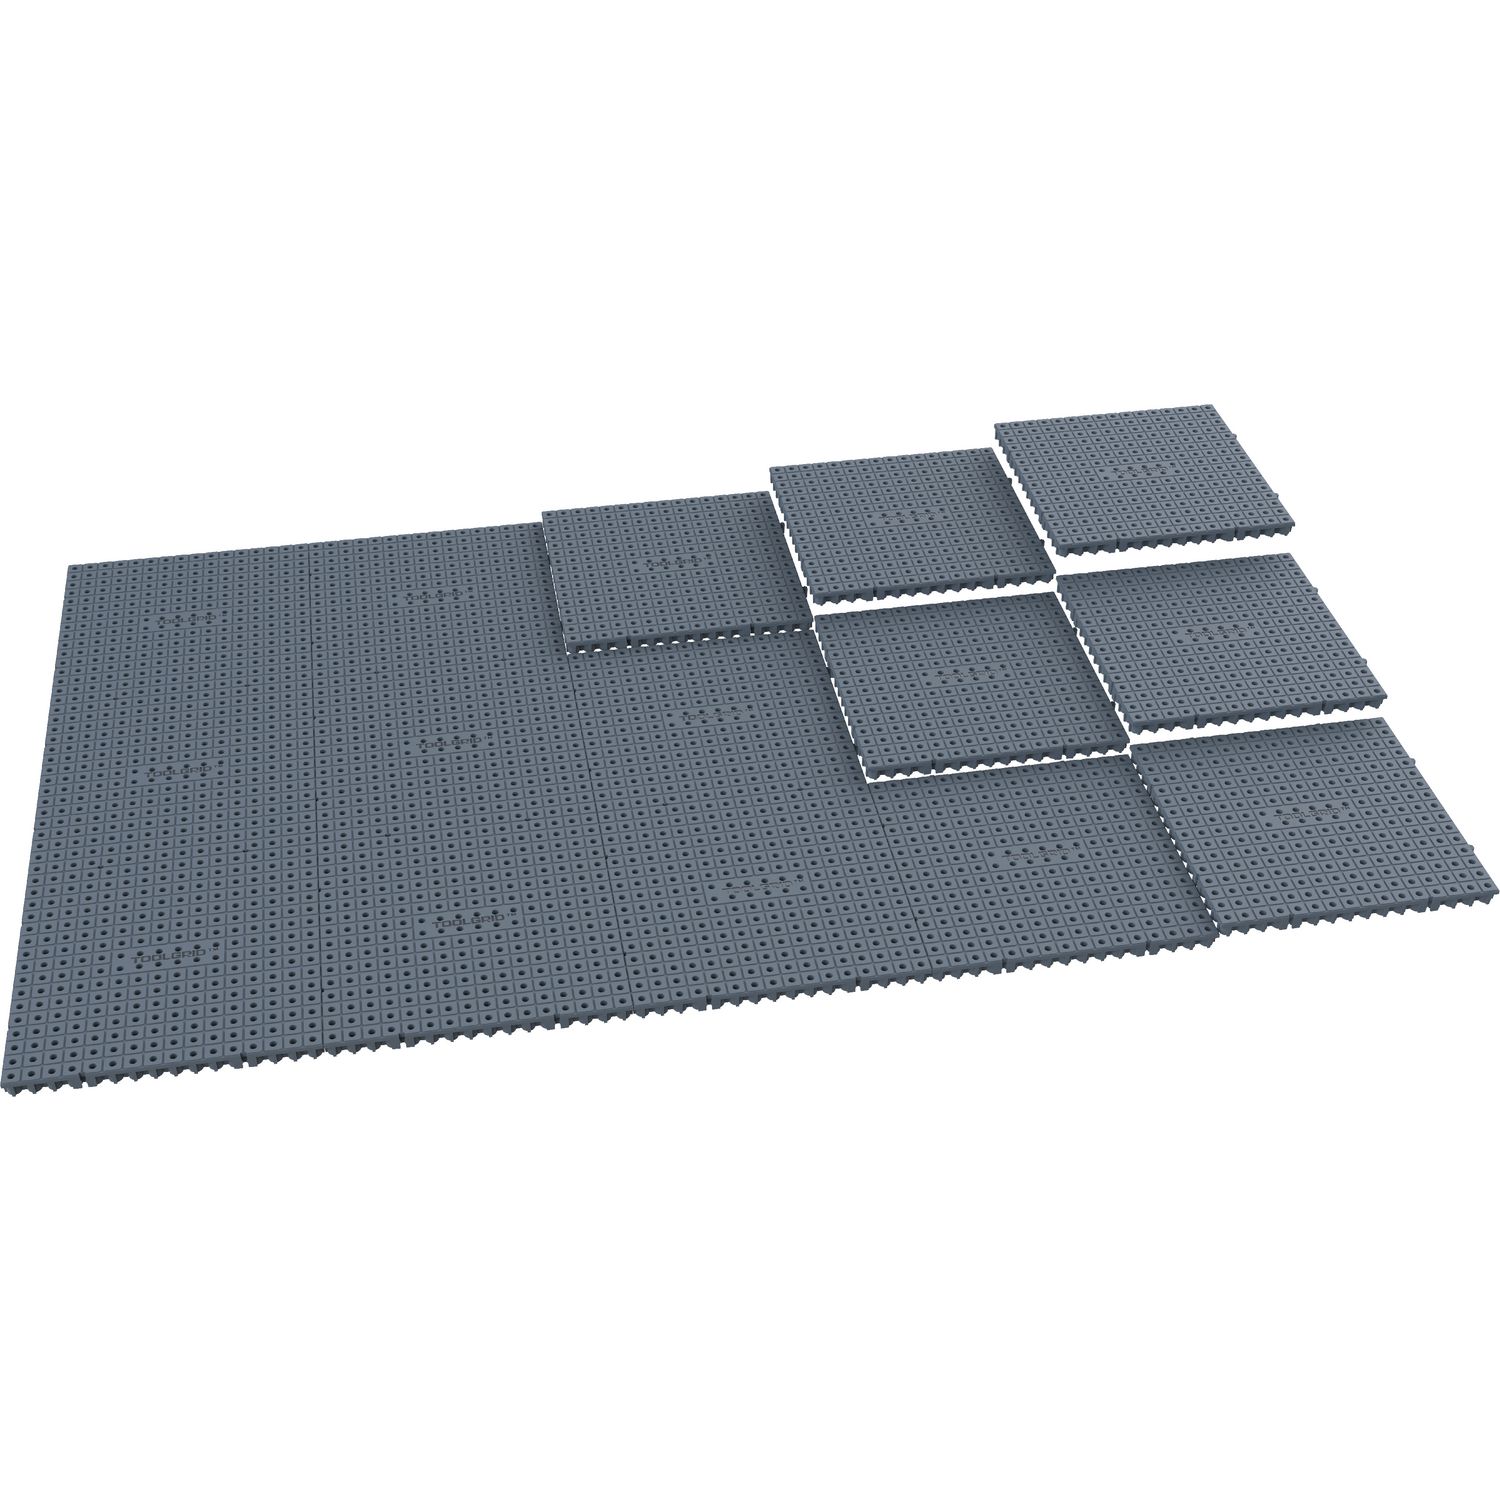 Matco Tool Grid Mounts/Pegs/Holders/Boards by Skeptec Designs